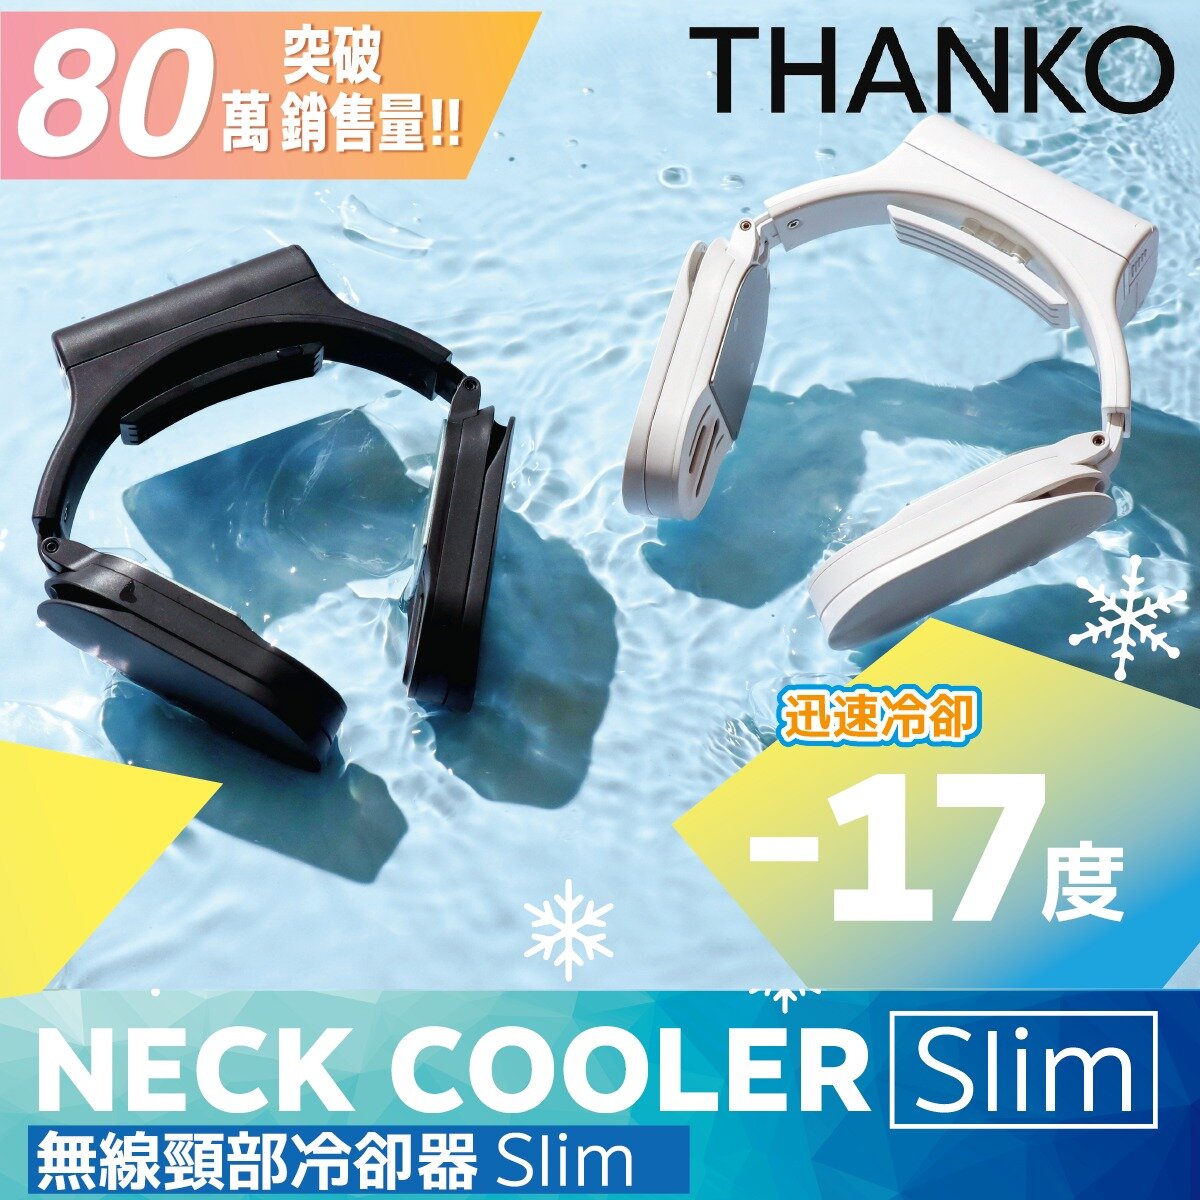 Thanko - Neck cooler Slim 無線頸部冷卻器｜便攜掛頸｜極速降溫｜降溫神器